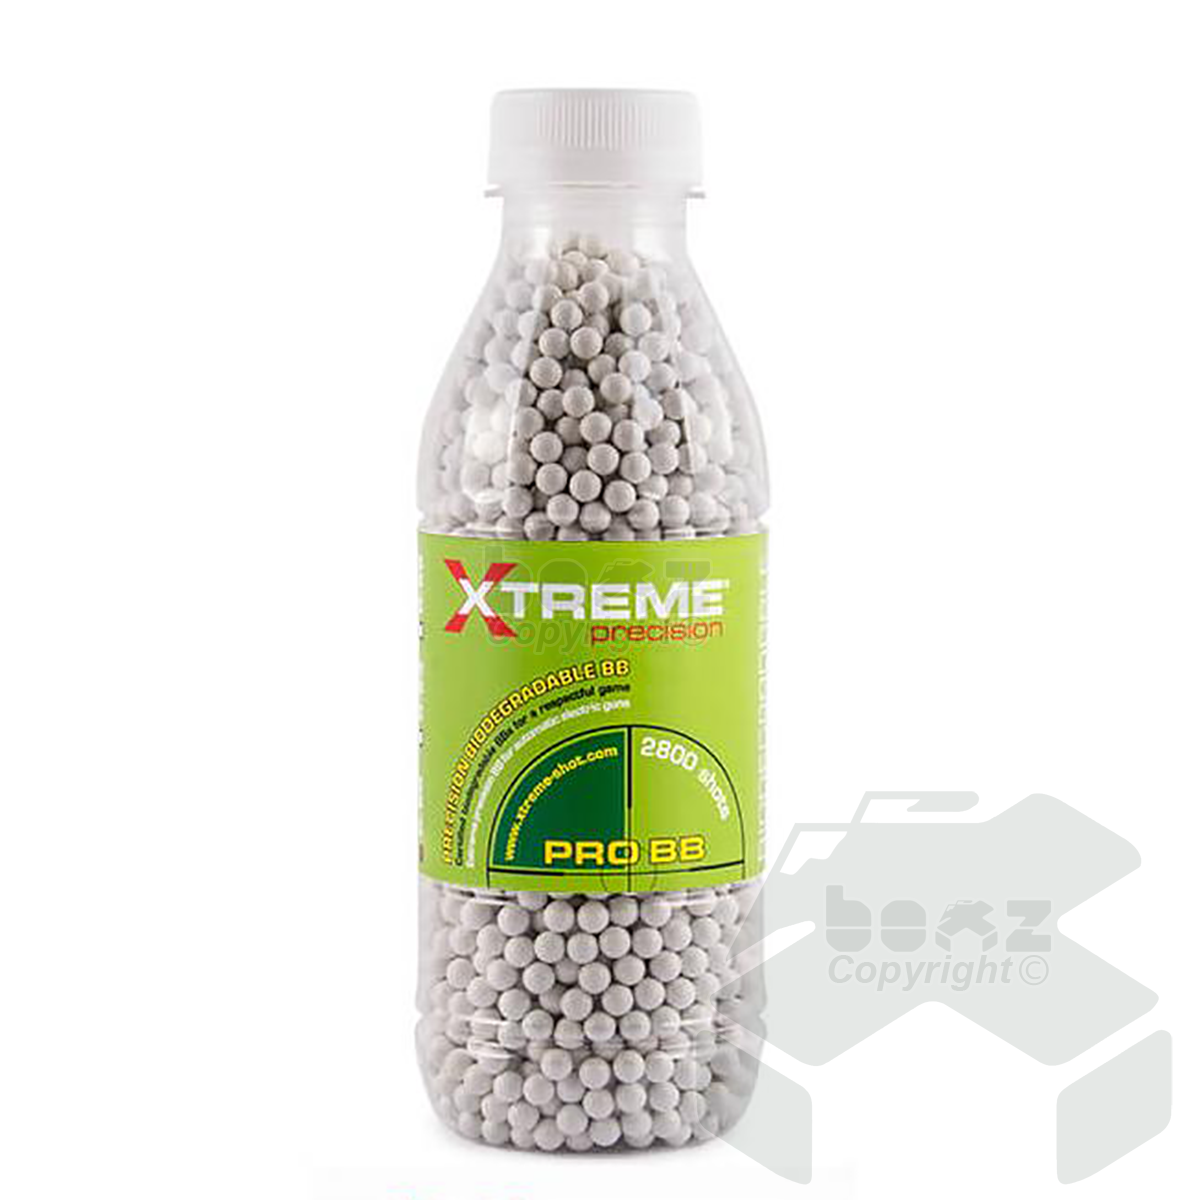 Xtreme Precision 0.23g Bio BBs White 2800 bottle